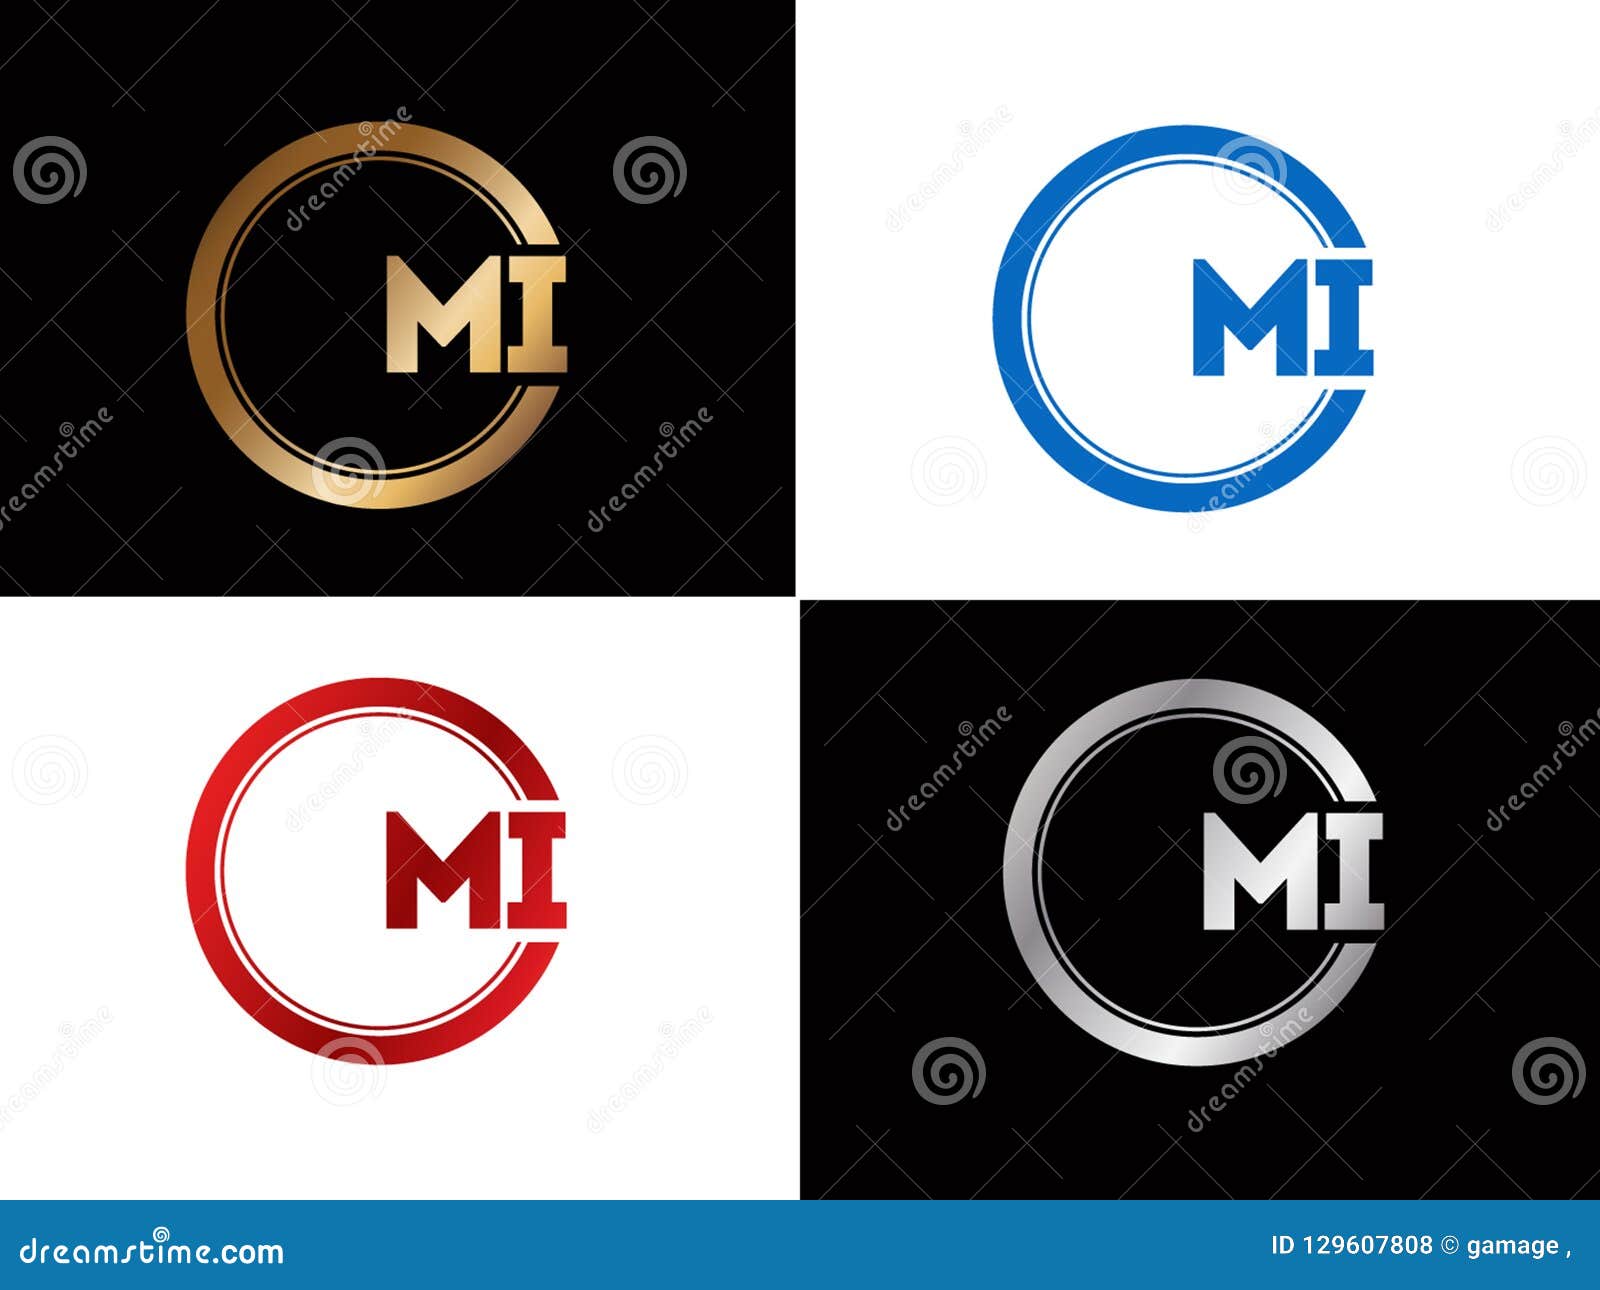 100,000 Mi logo Vector Images | Depositphotos